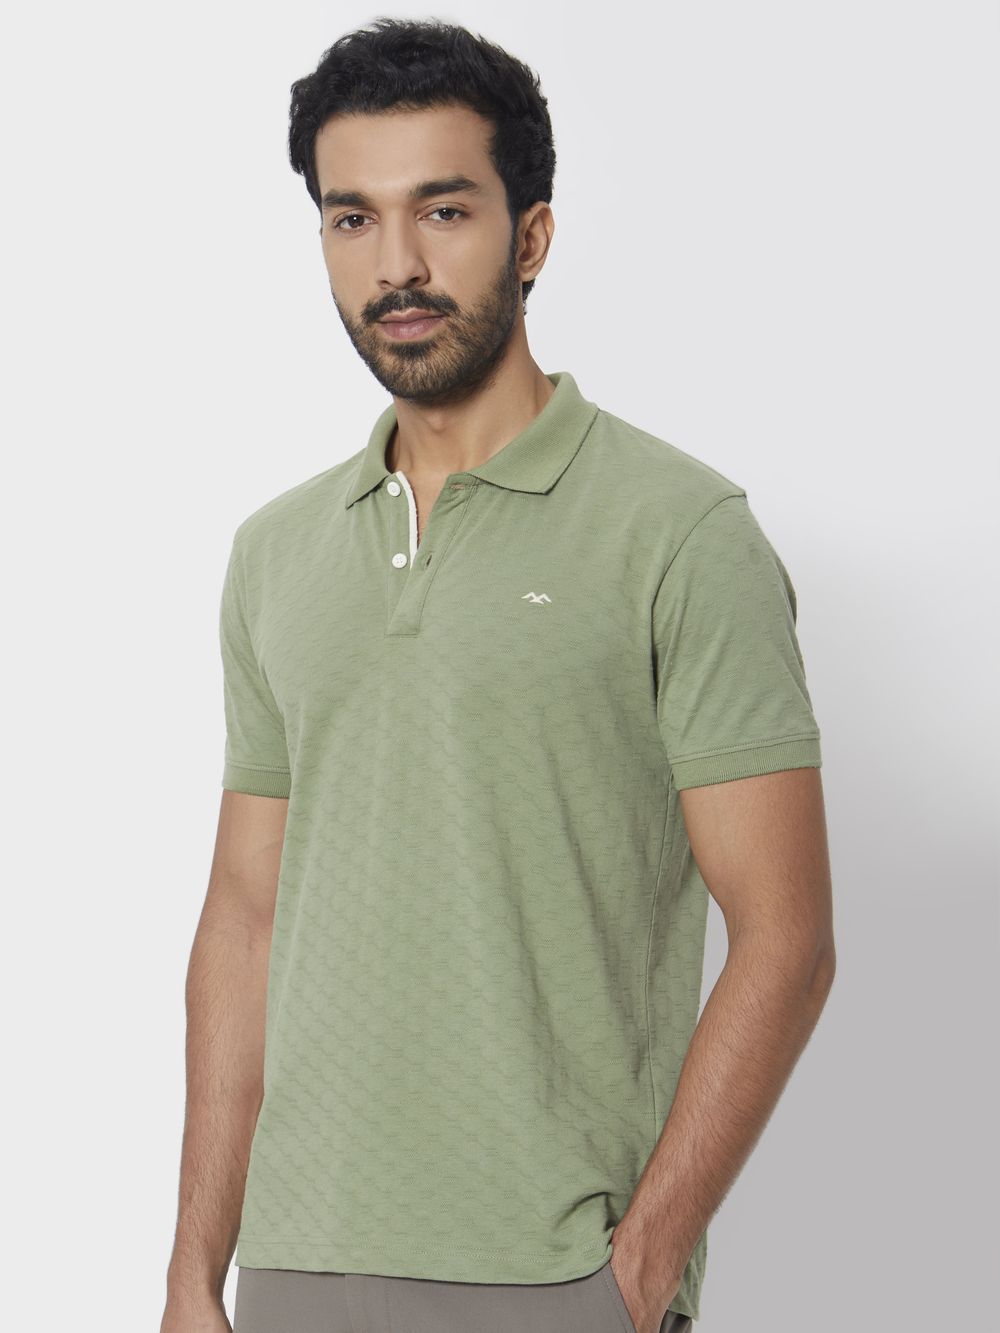 Light Olive Textured Plain Slim Fit Polo T-Shirt